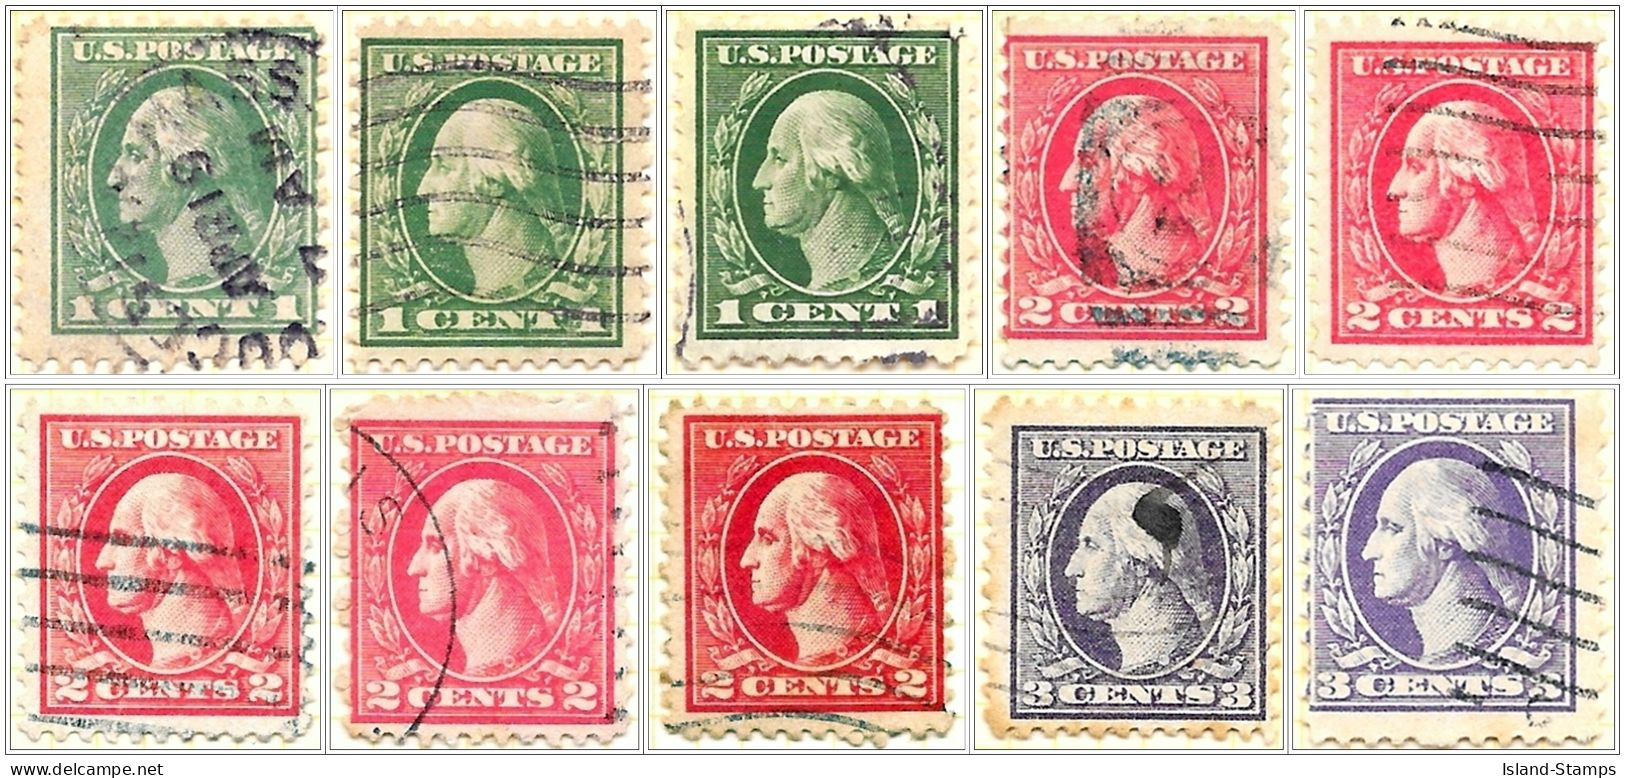 USA 1918-20 Washington 10 Offset Printing Values Used V1 - Used Stamps